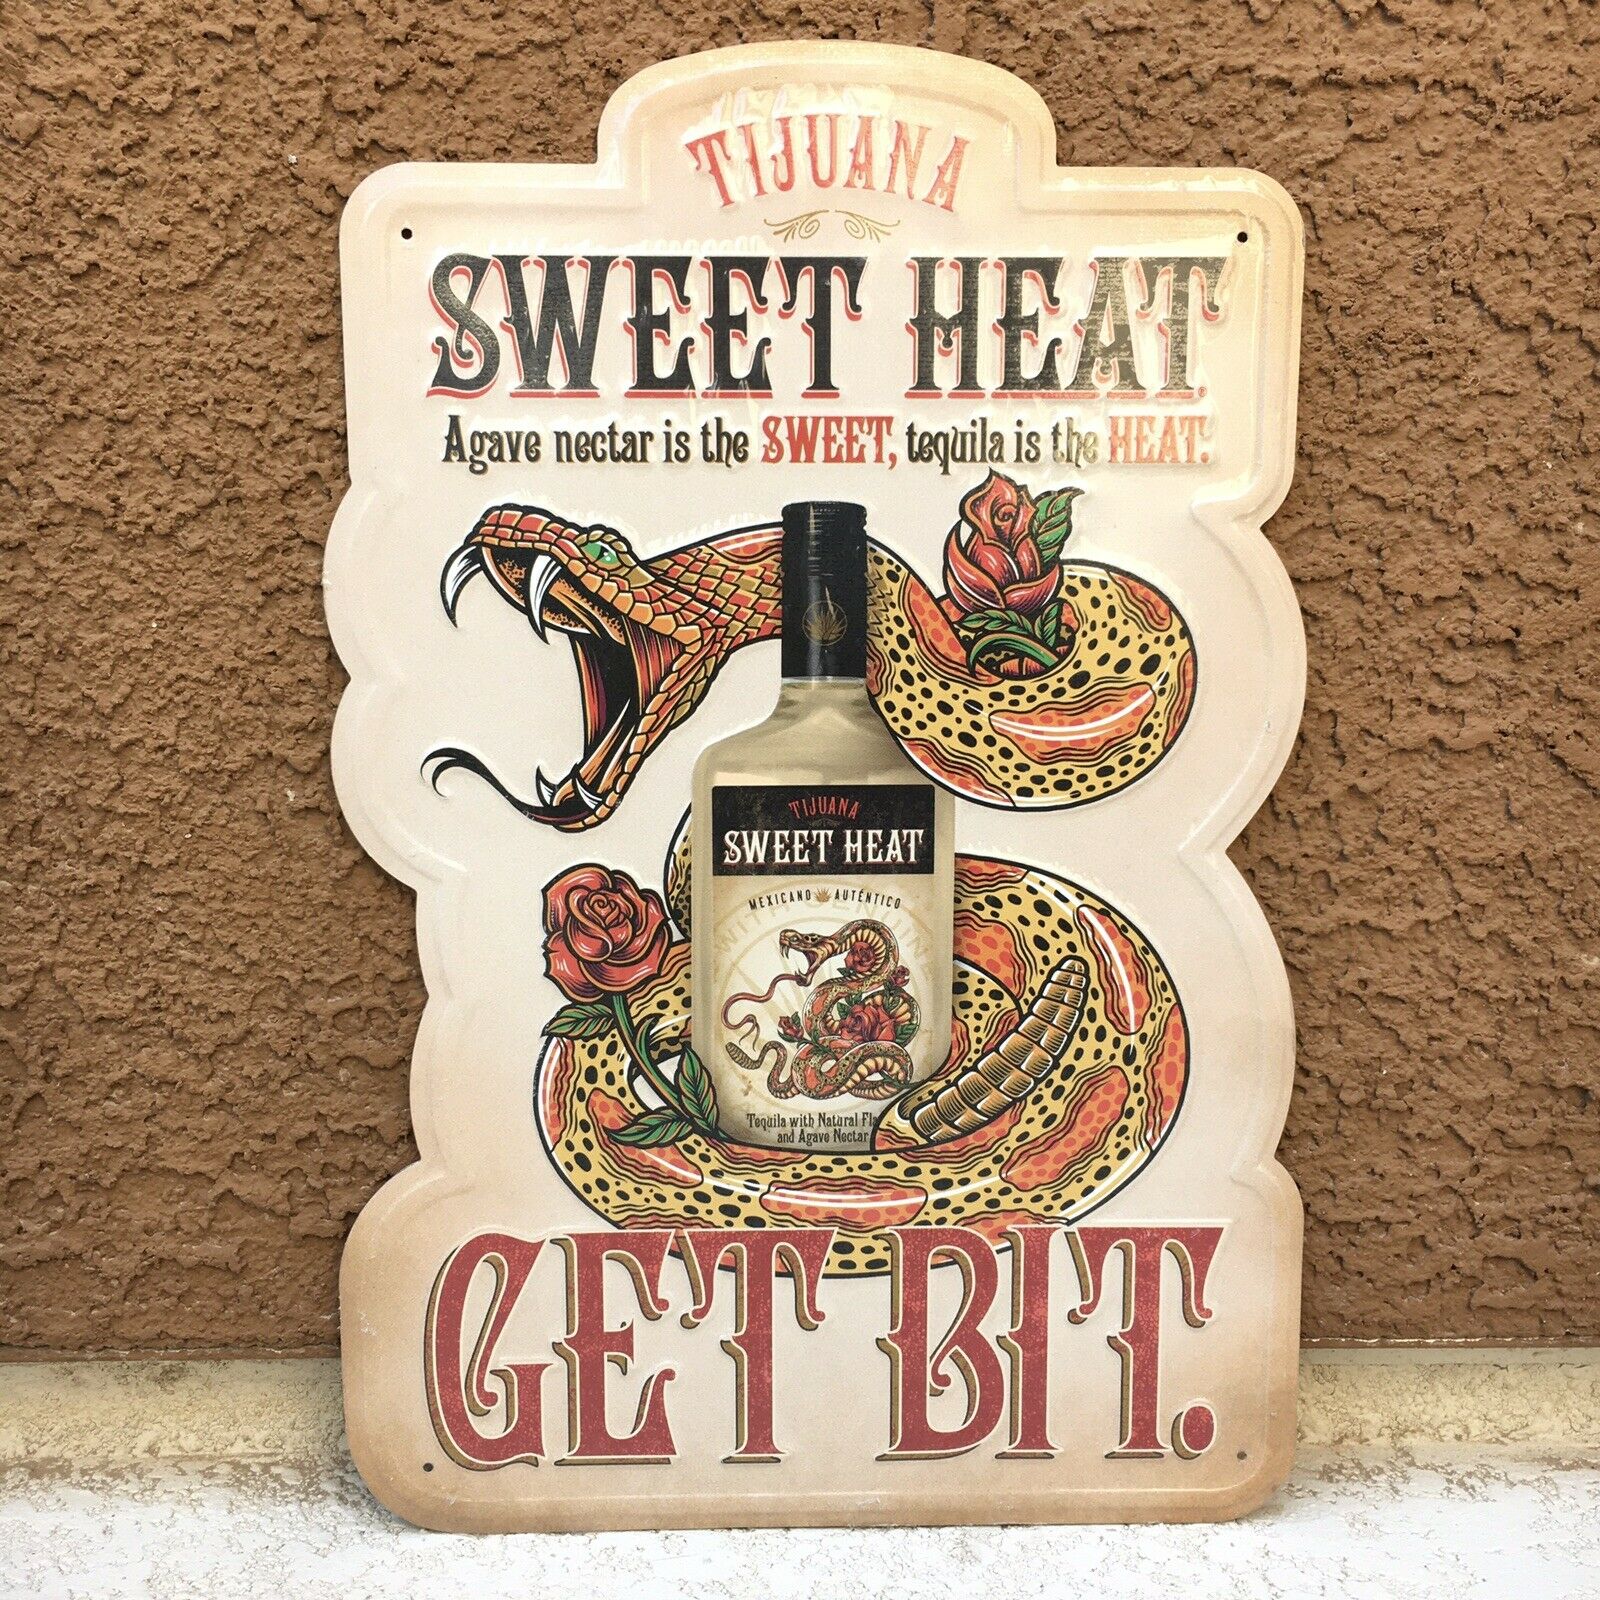 Tijuana Sweet Heat Tequila Get Bit Metal Sign Advertisement - Snake Liquor Bar